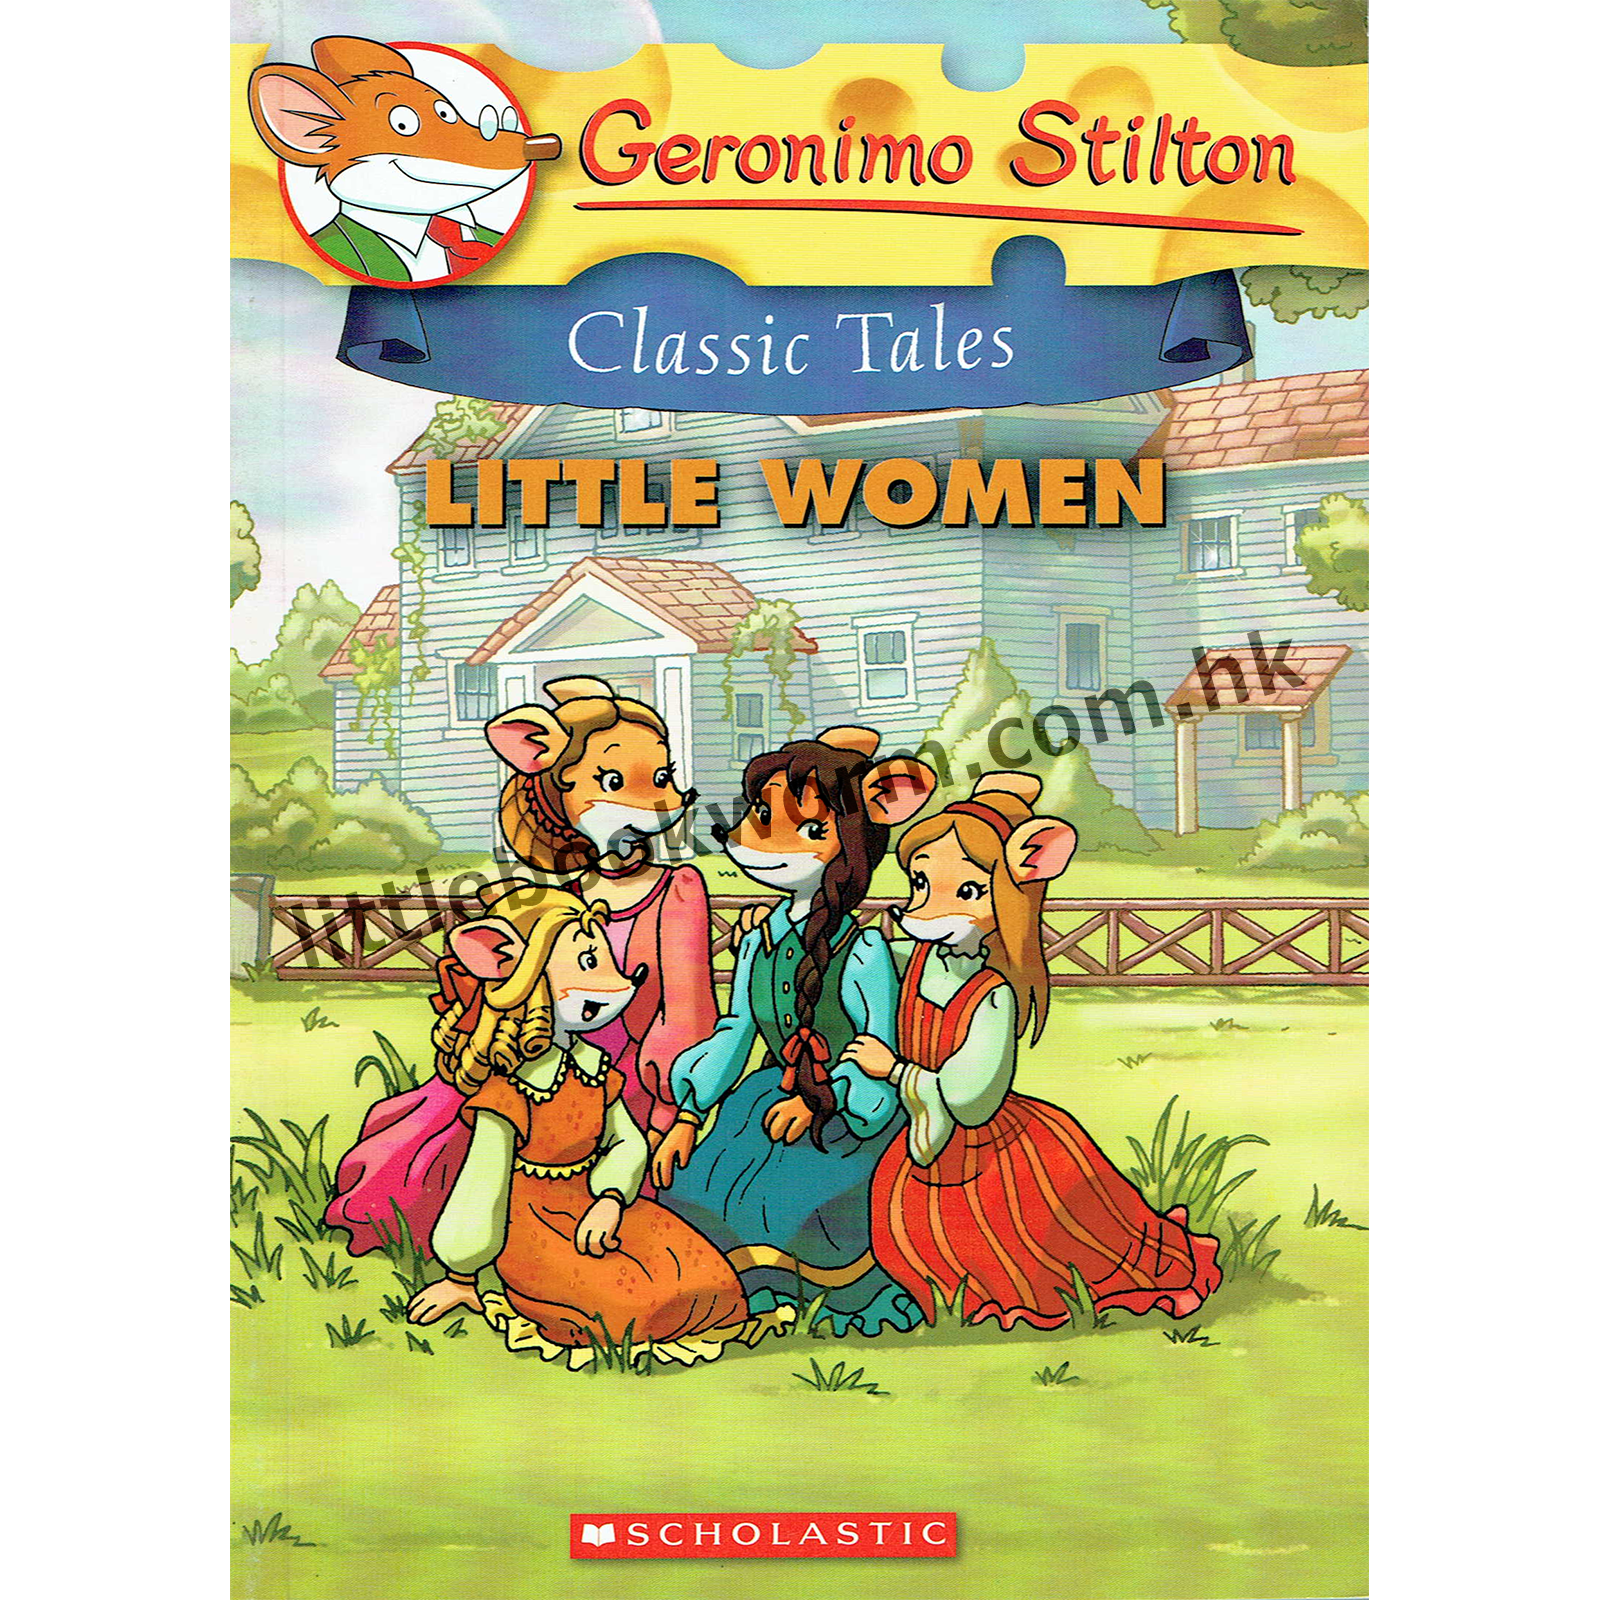 Geronimo Stilton Classics Tales Collection (Books 1-10)